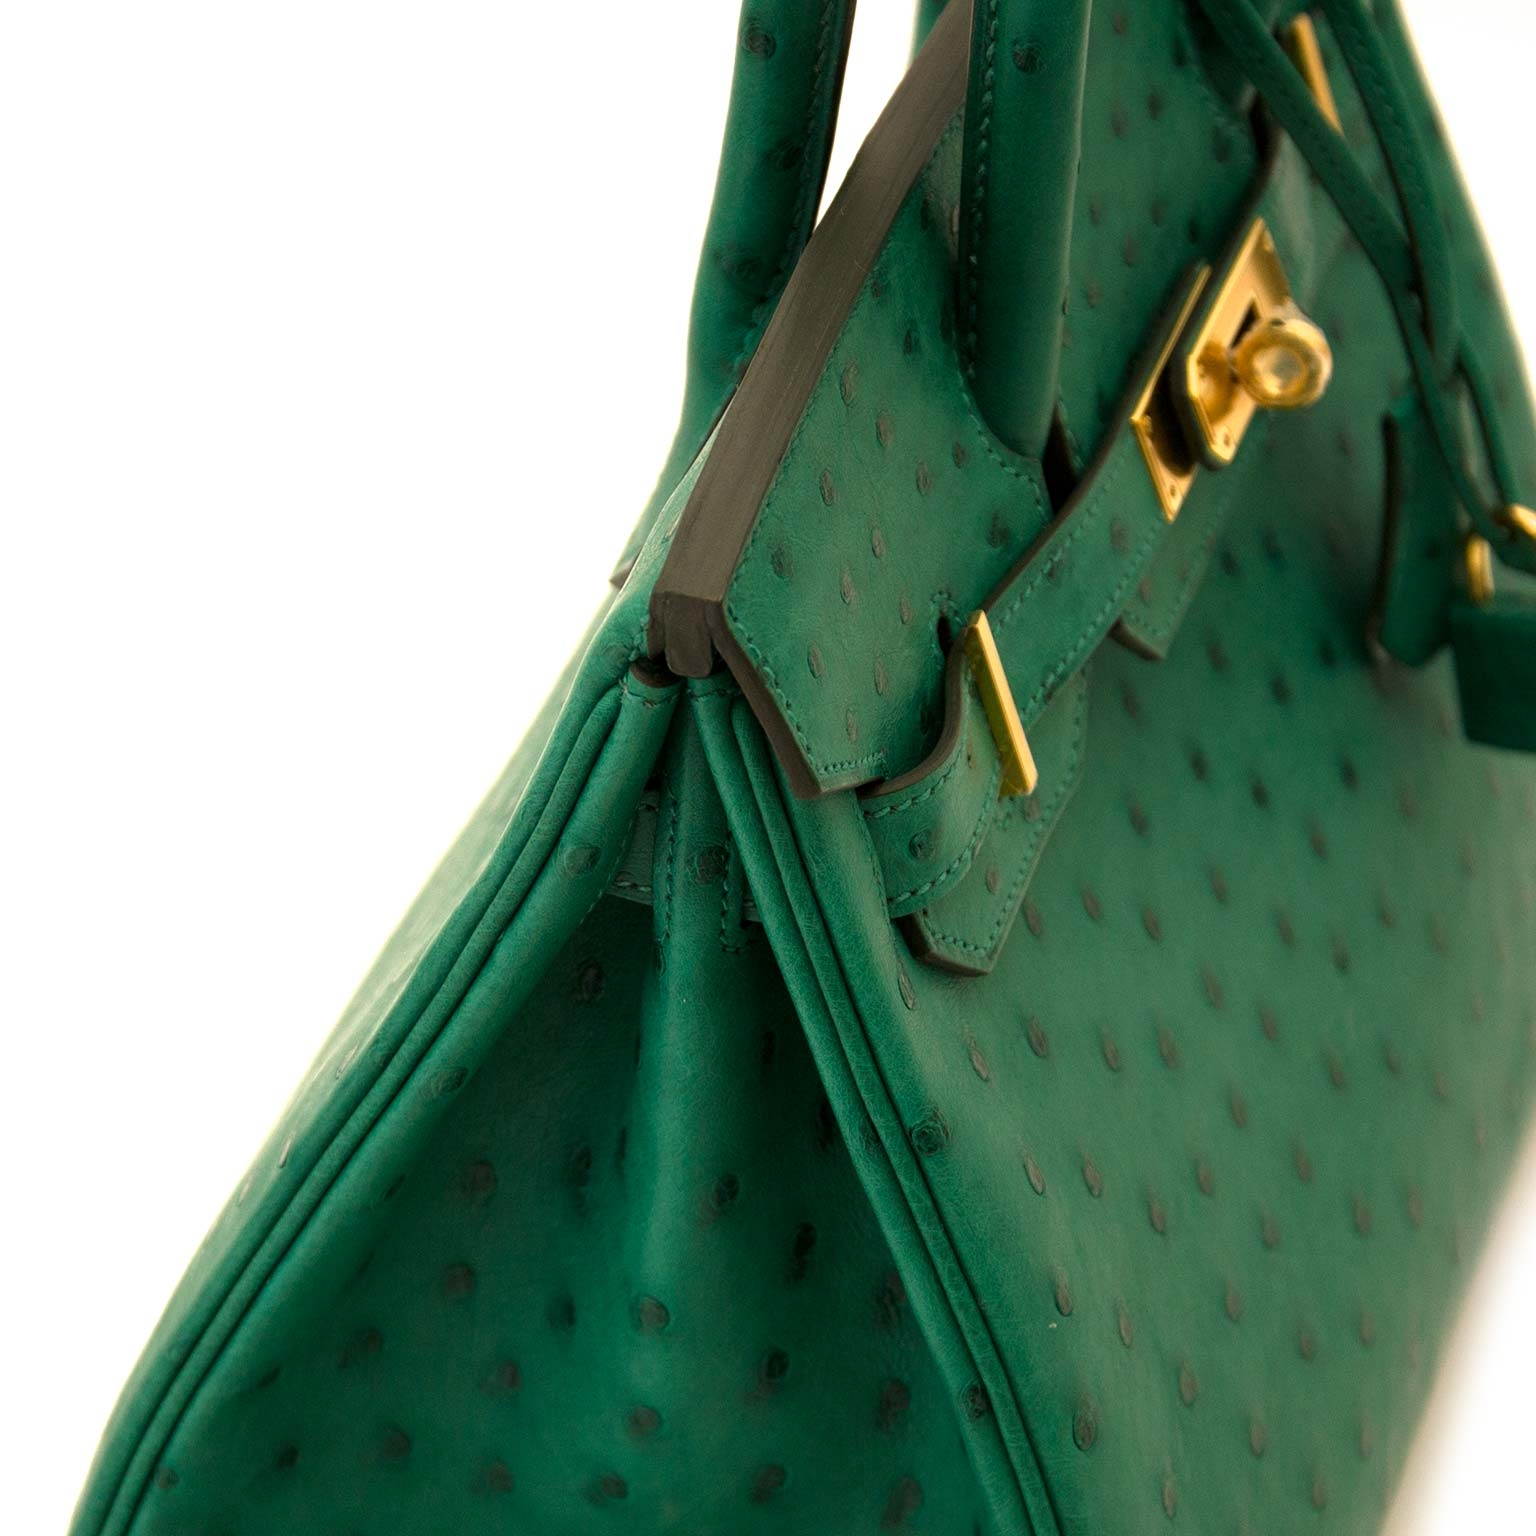 USA Hermes Birkin 25cm Ostrich U4 vert vertigo 絲絨綠拼瑪瑙灰拉絲金扣-Qatar Kuwait  Hermes Birkin Kelly Lindy bag